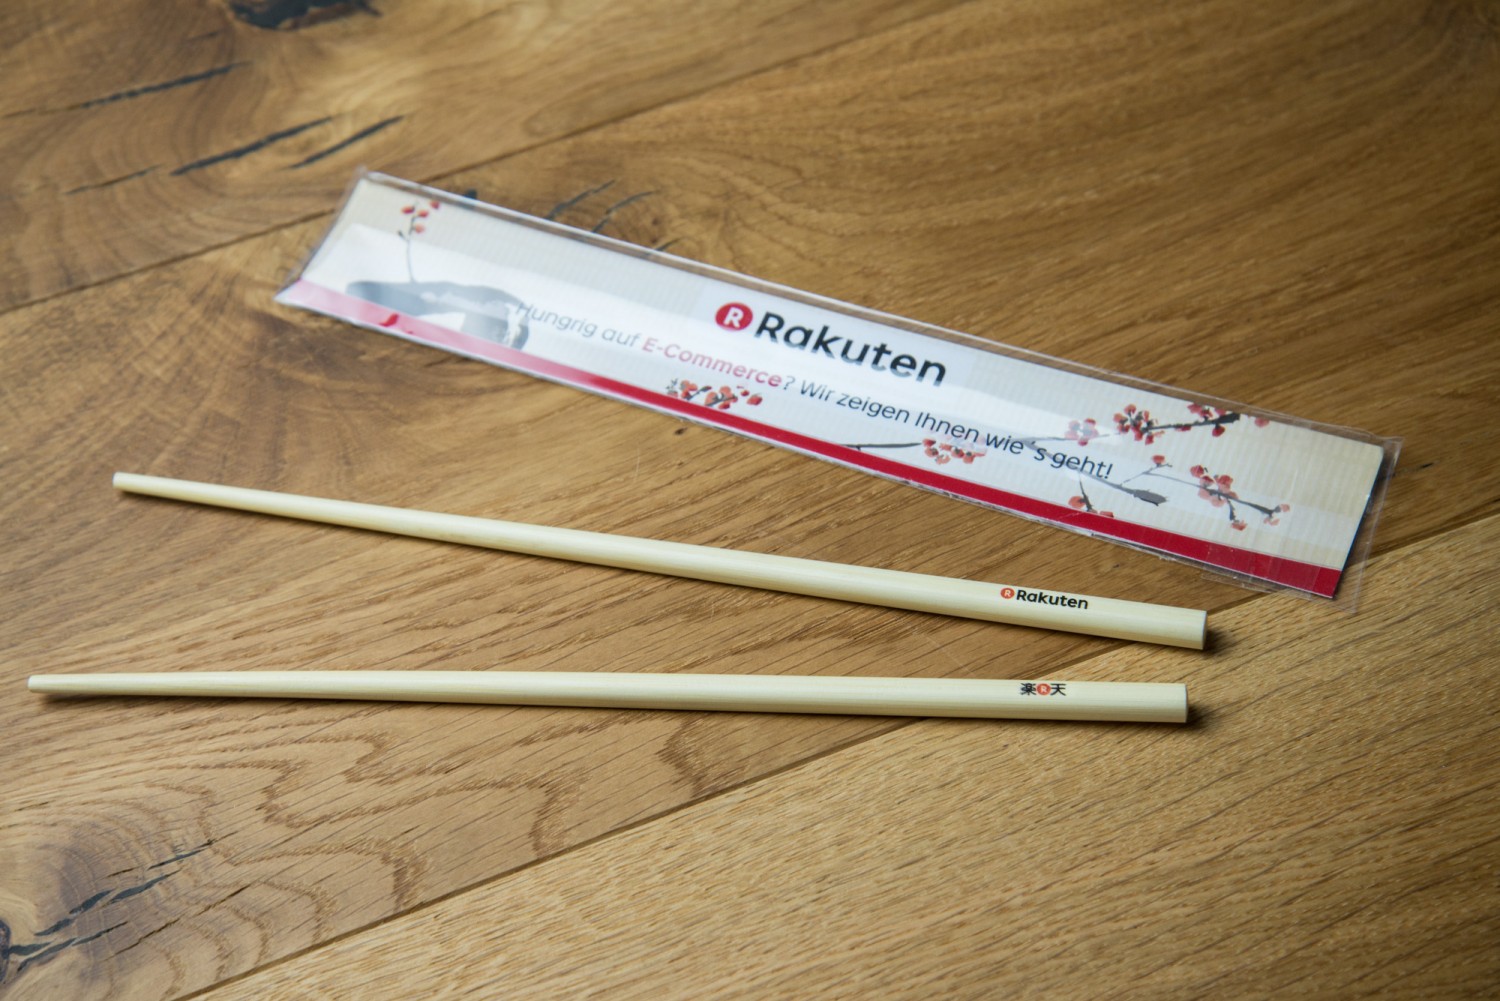 custom chopstick wrappers